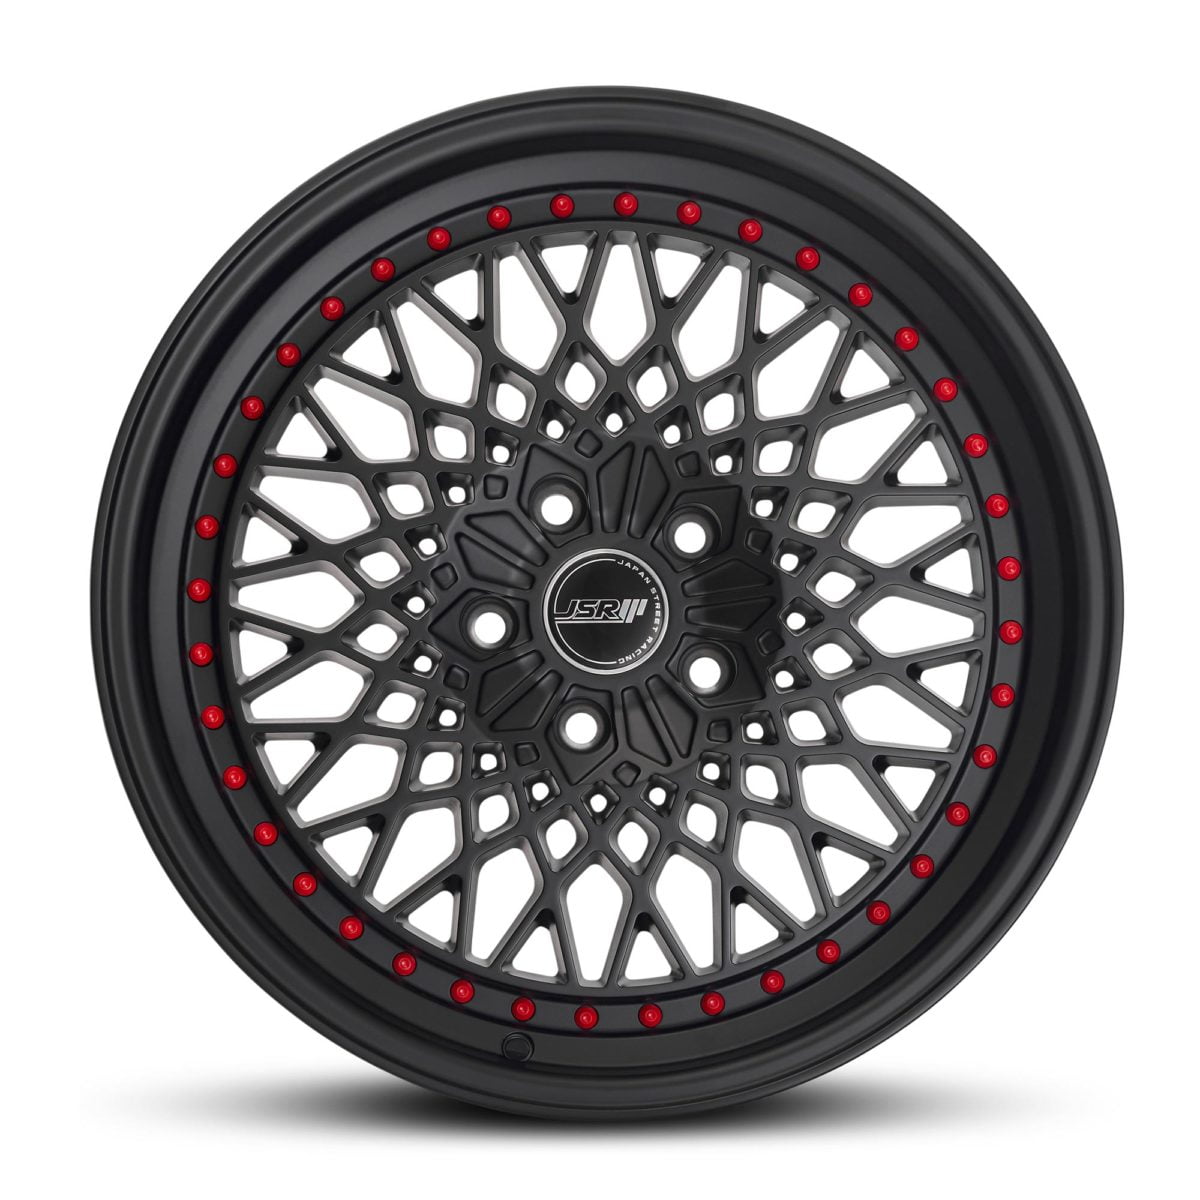 Racing Wheels JSR ST19 Satin Black With Red Rivets JDM Wheels Japan Street Racing Rims